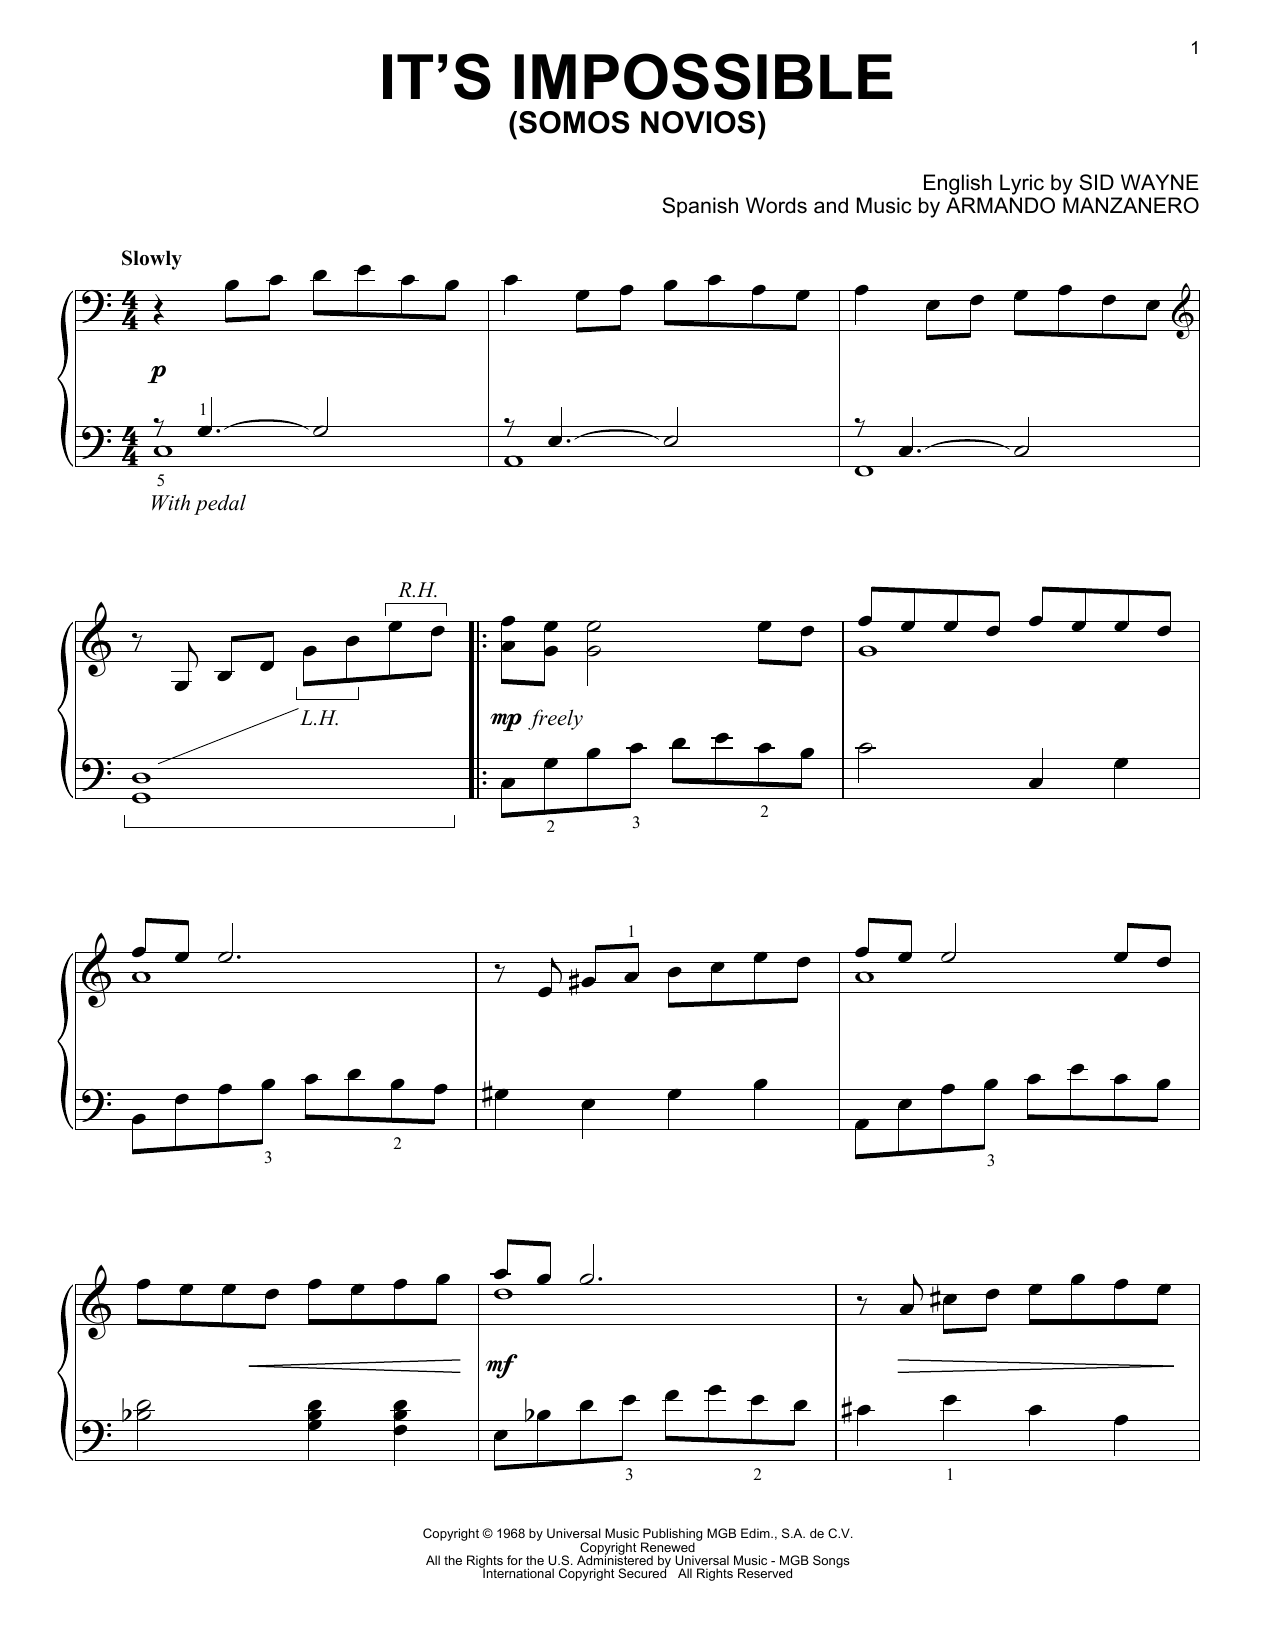 Armando Manzanero It's Impossible (Somos Novios) Sheet Music Notes & Chords for Piano - Download or Print PDF